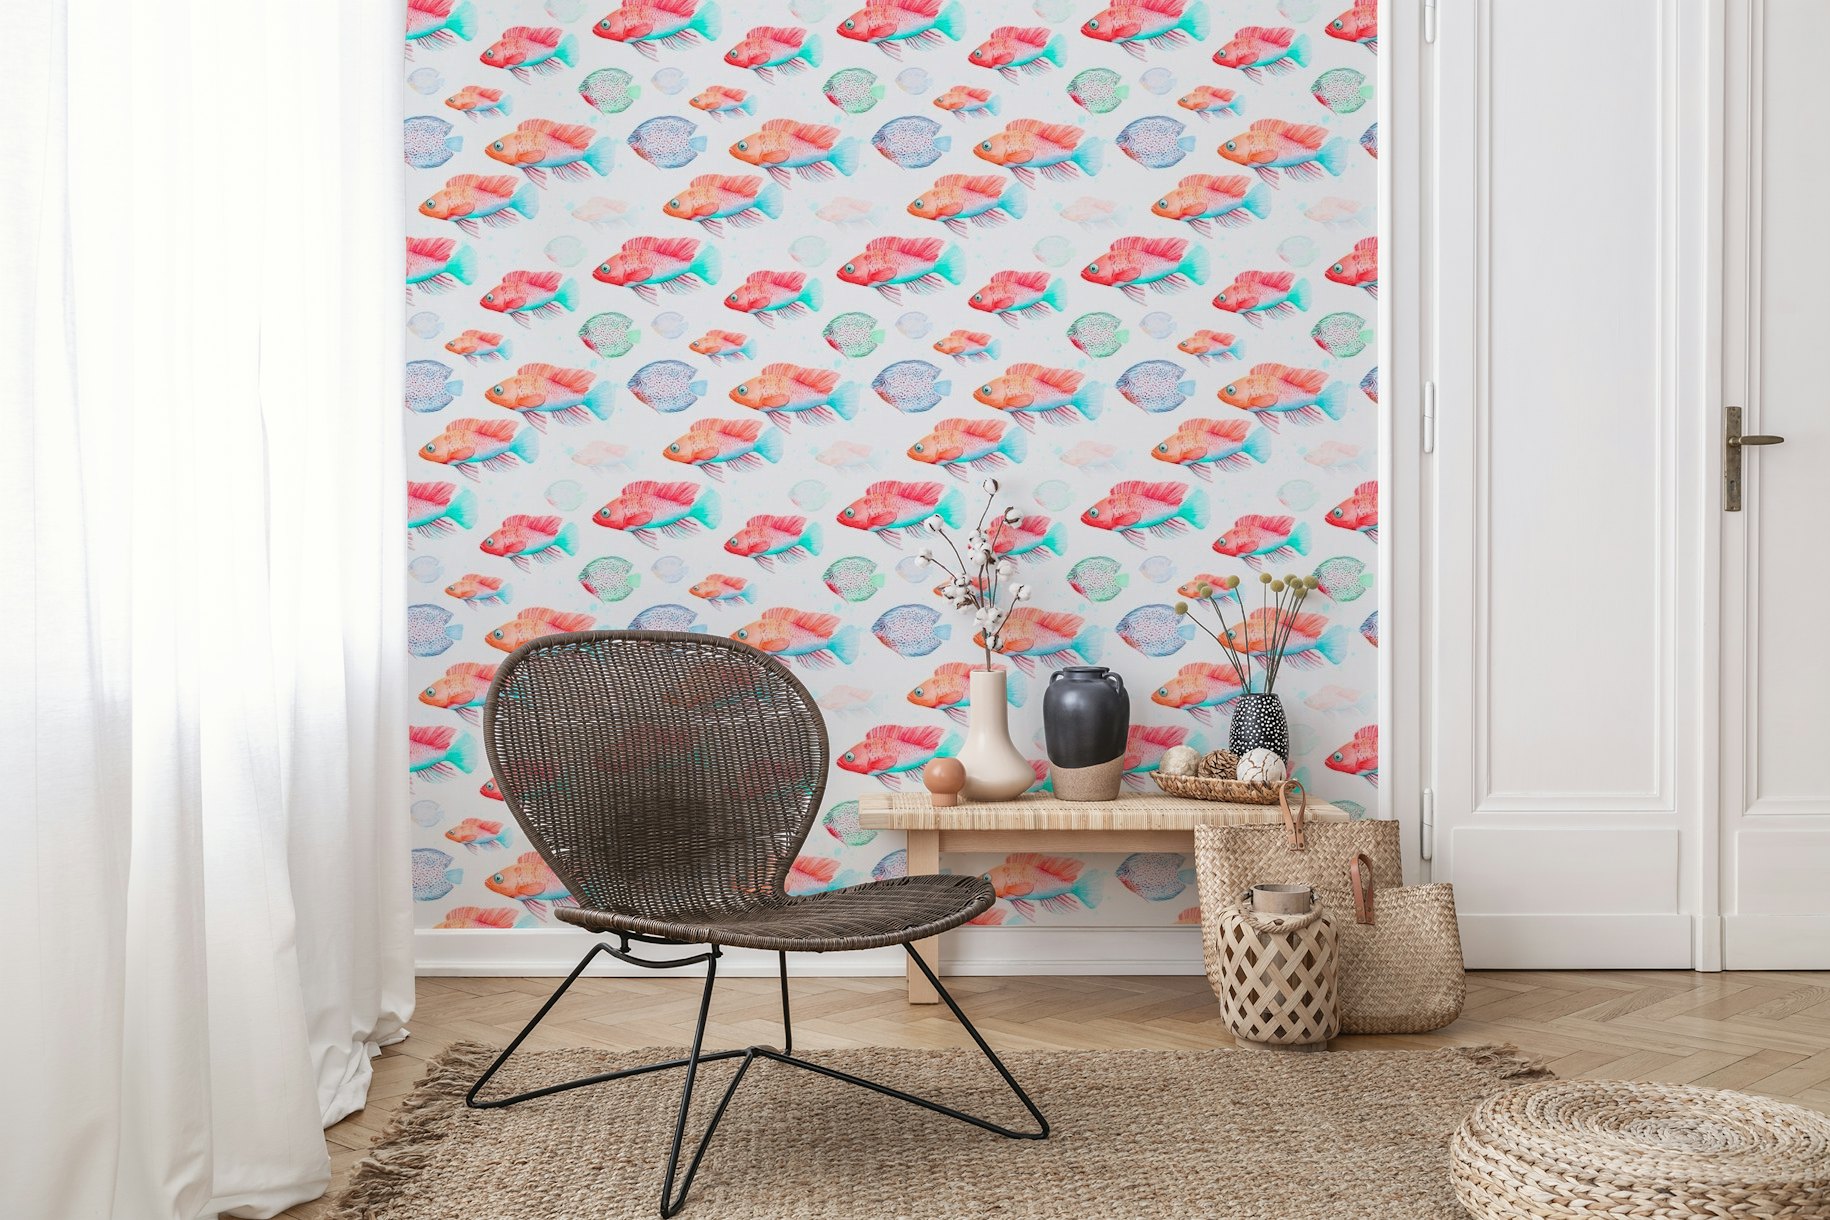 Ma Little Fish wallpaper